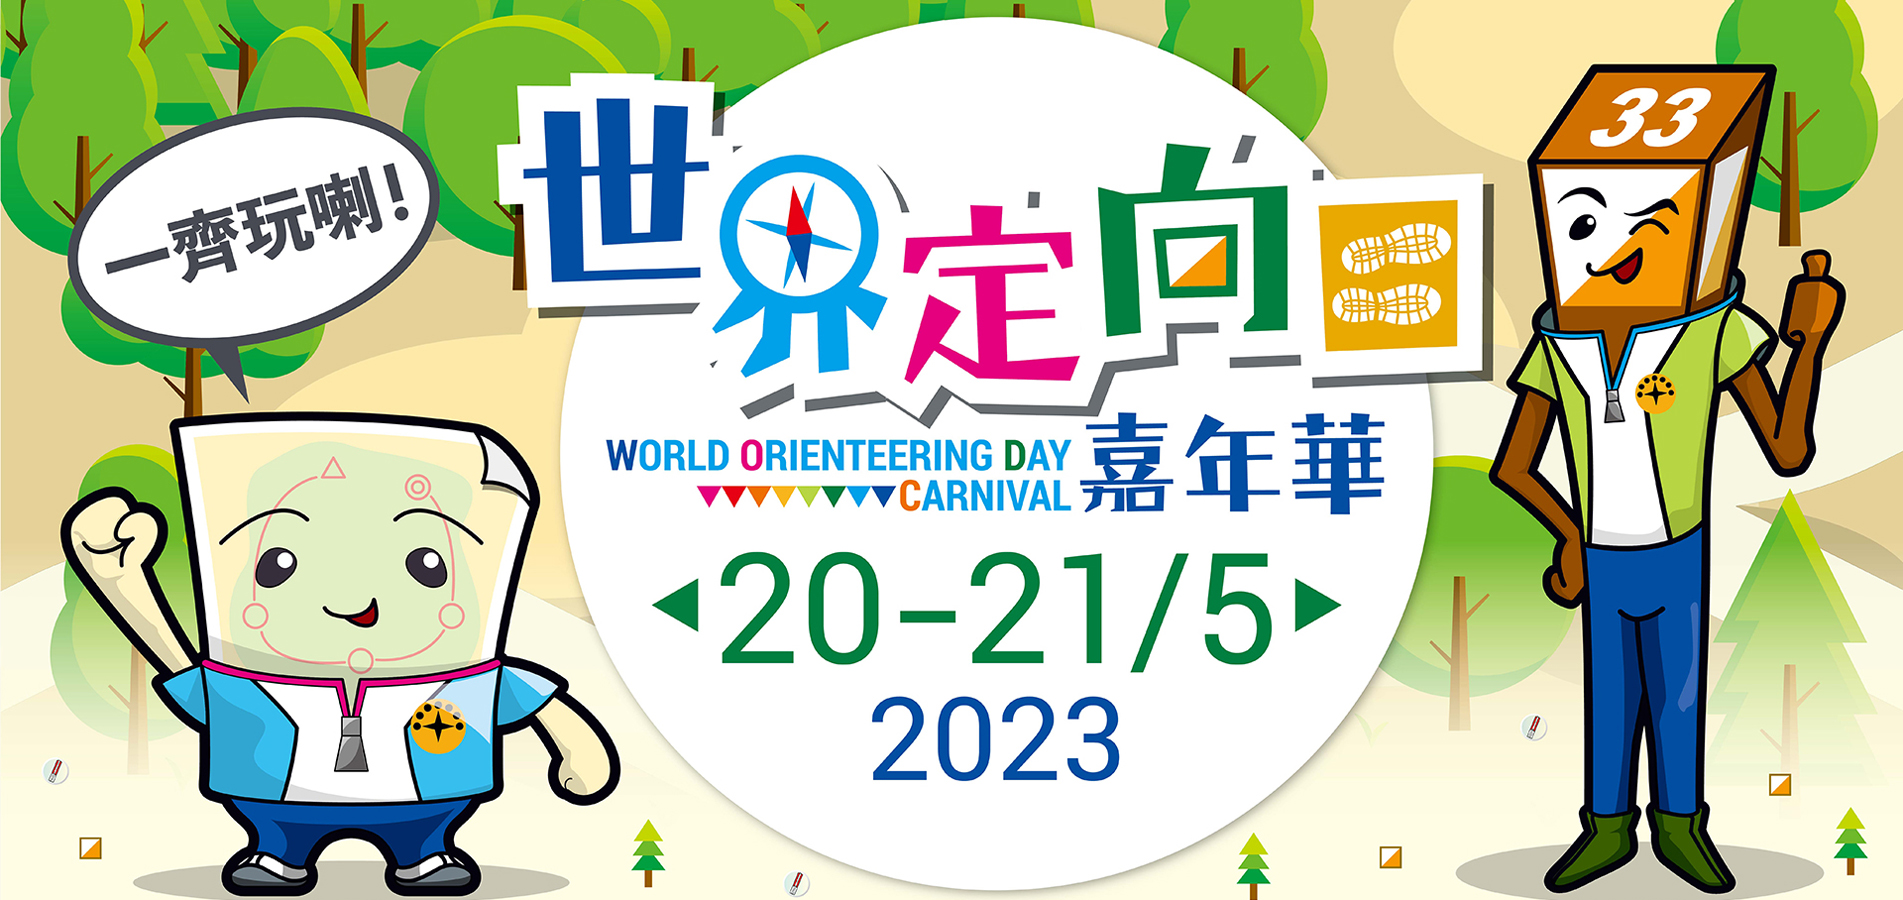 World Orienteering Day Carnival